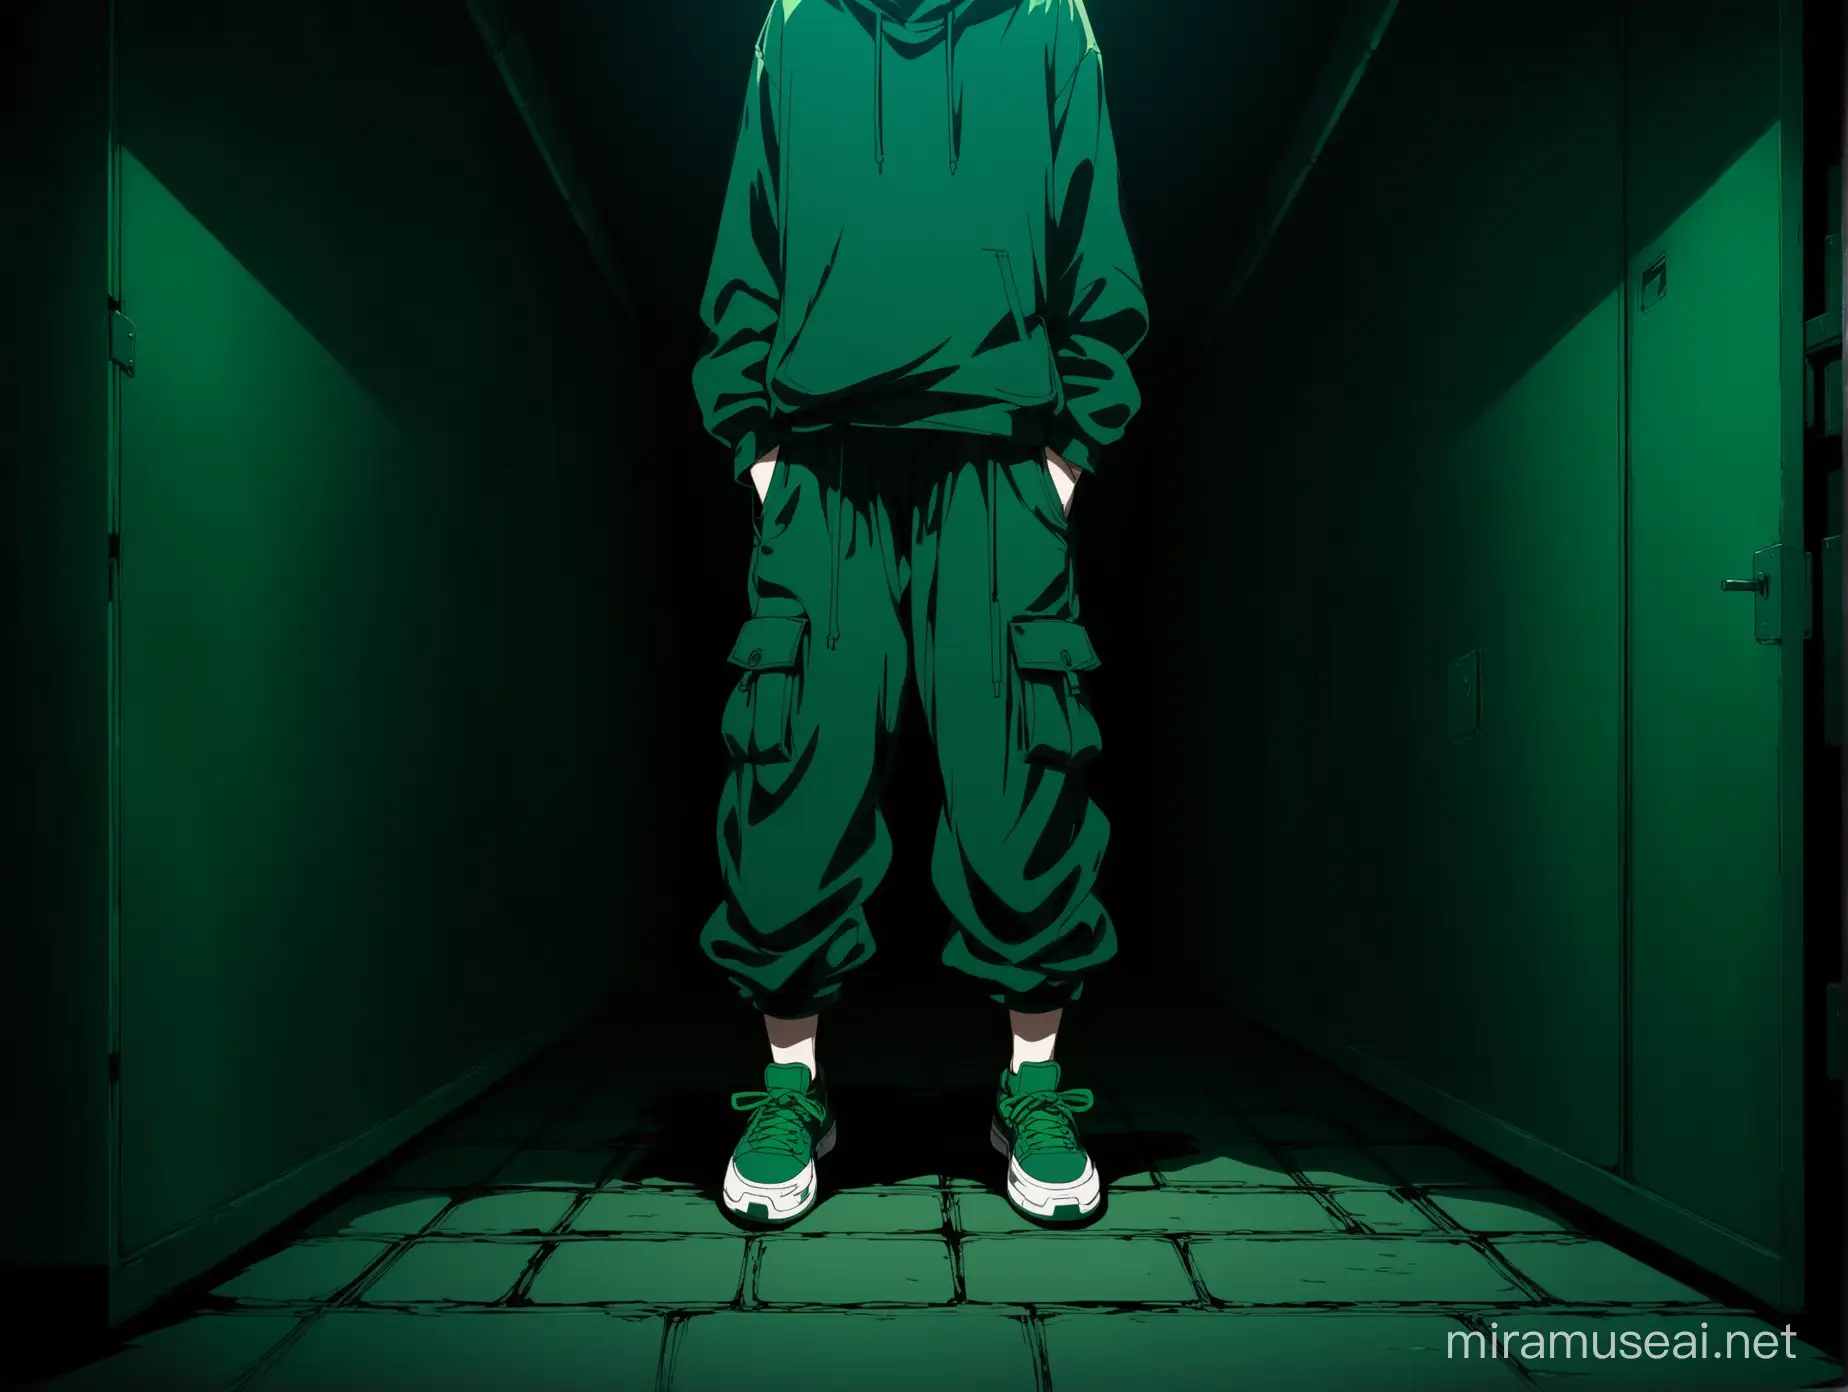 Anime Characters Legs in Dark Secret Underground Room